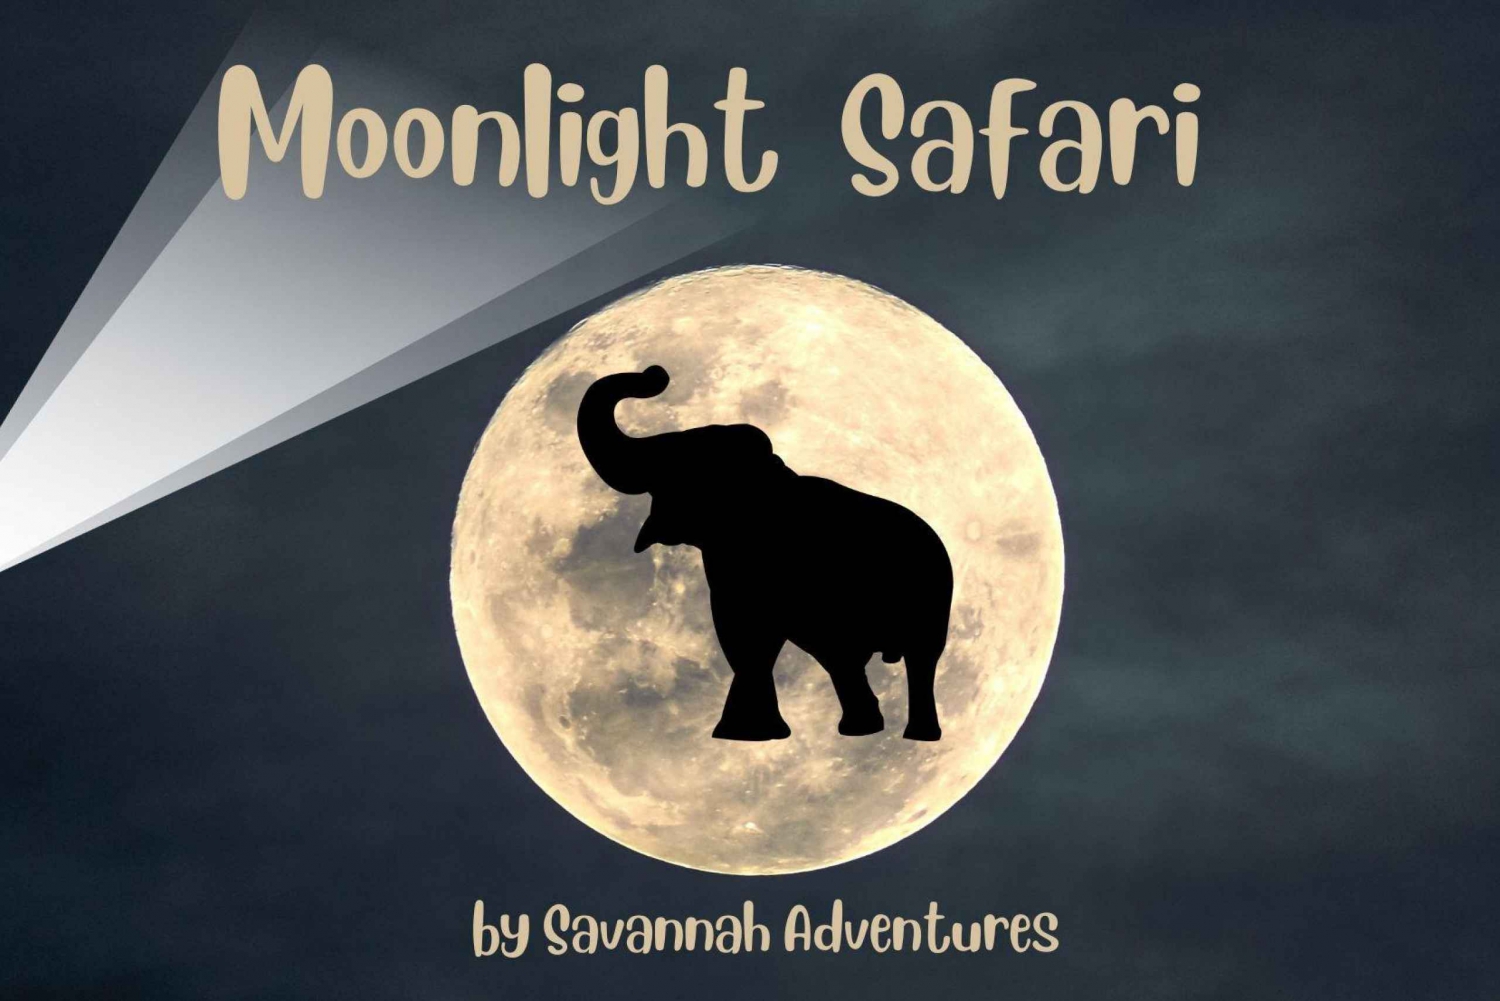 Victoria Falls: Flashlight Safari in 4x4